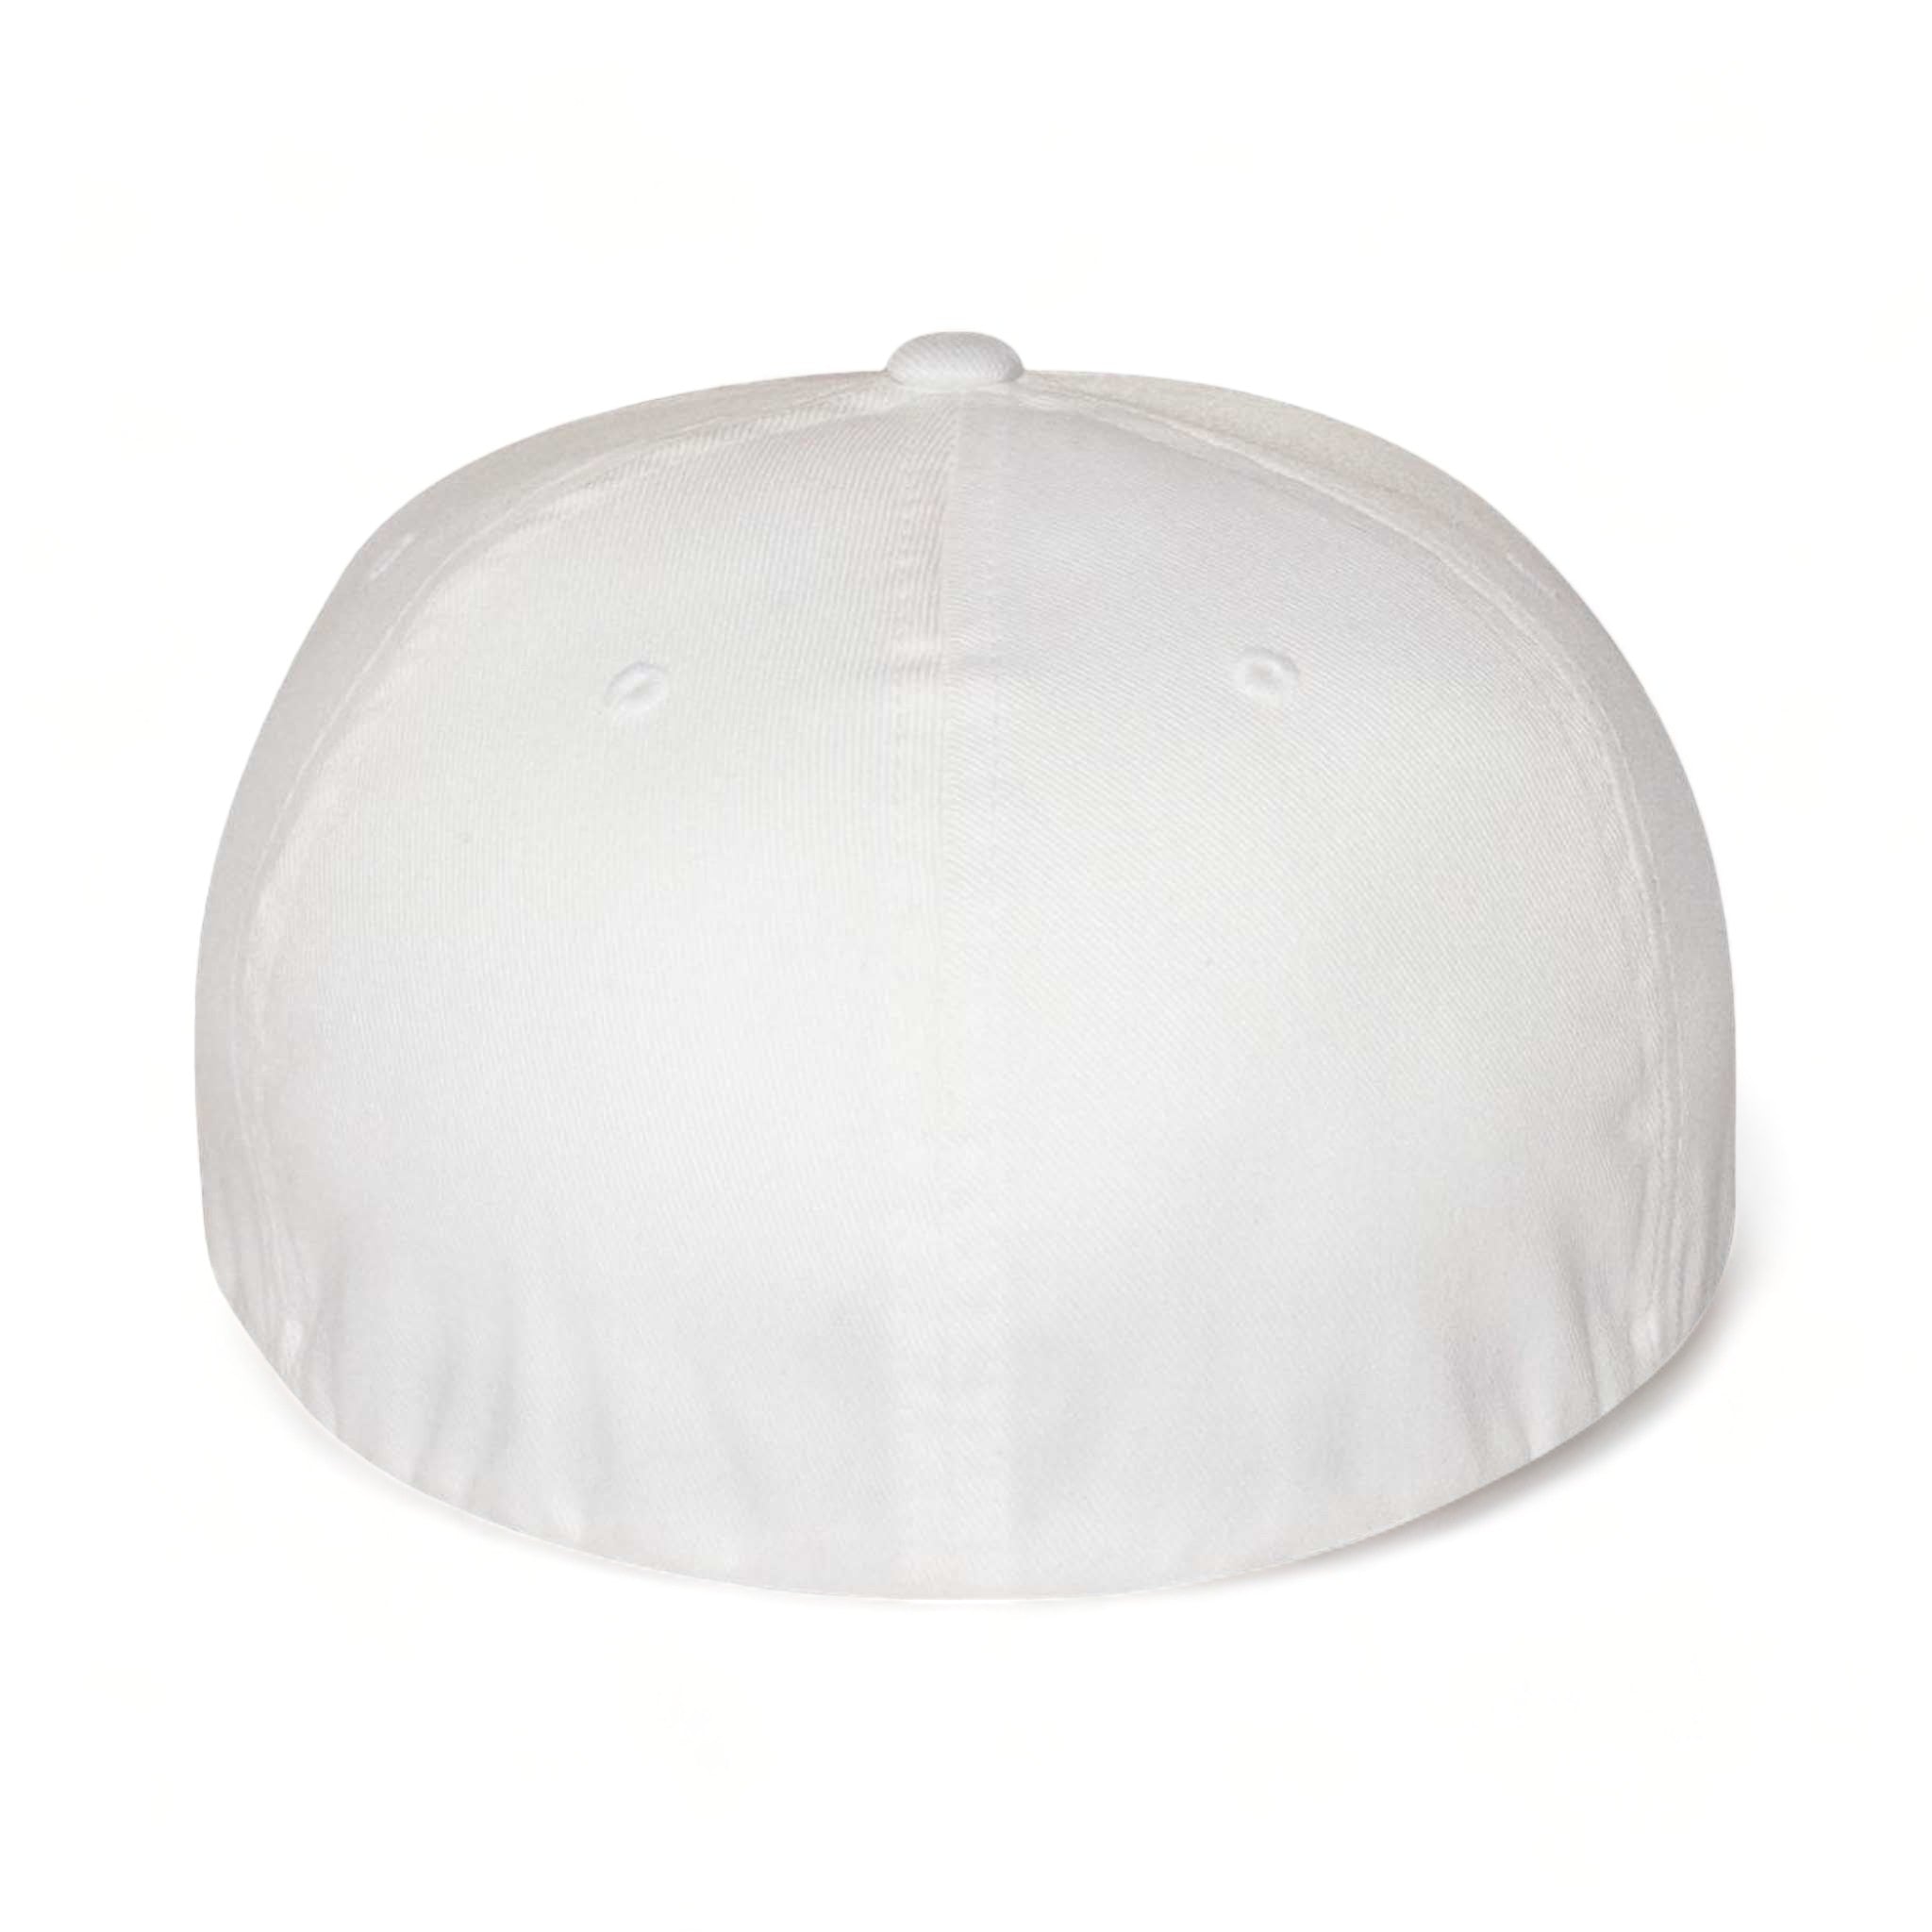 Back view of Flexfit 6297f custom hat in white